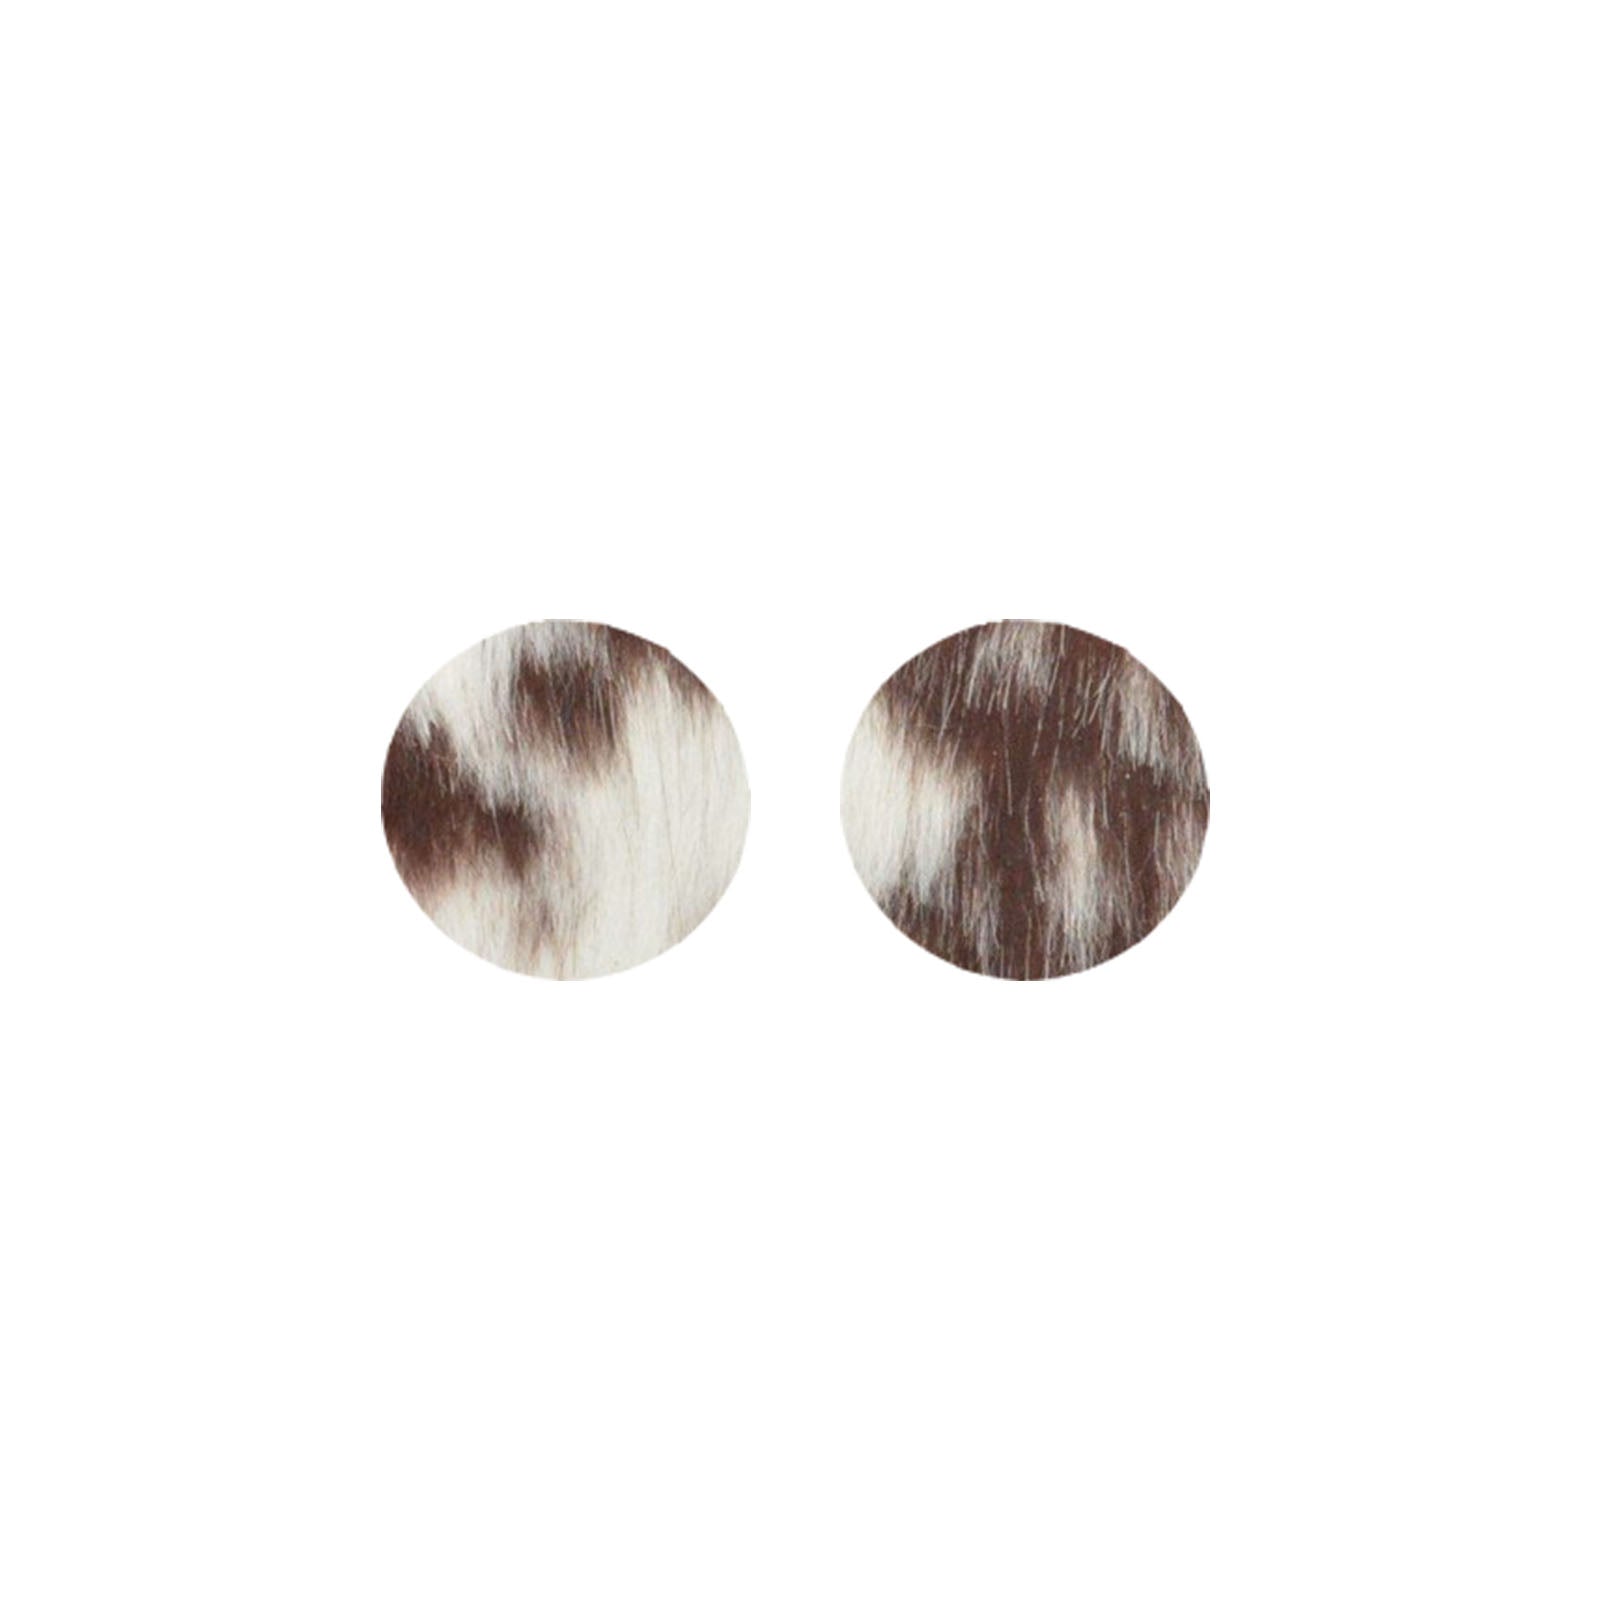 Bi-Color Medium Brown and Off-White Hair On Die Cut Earrings, Medium Circle | The Leather Guy